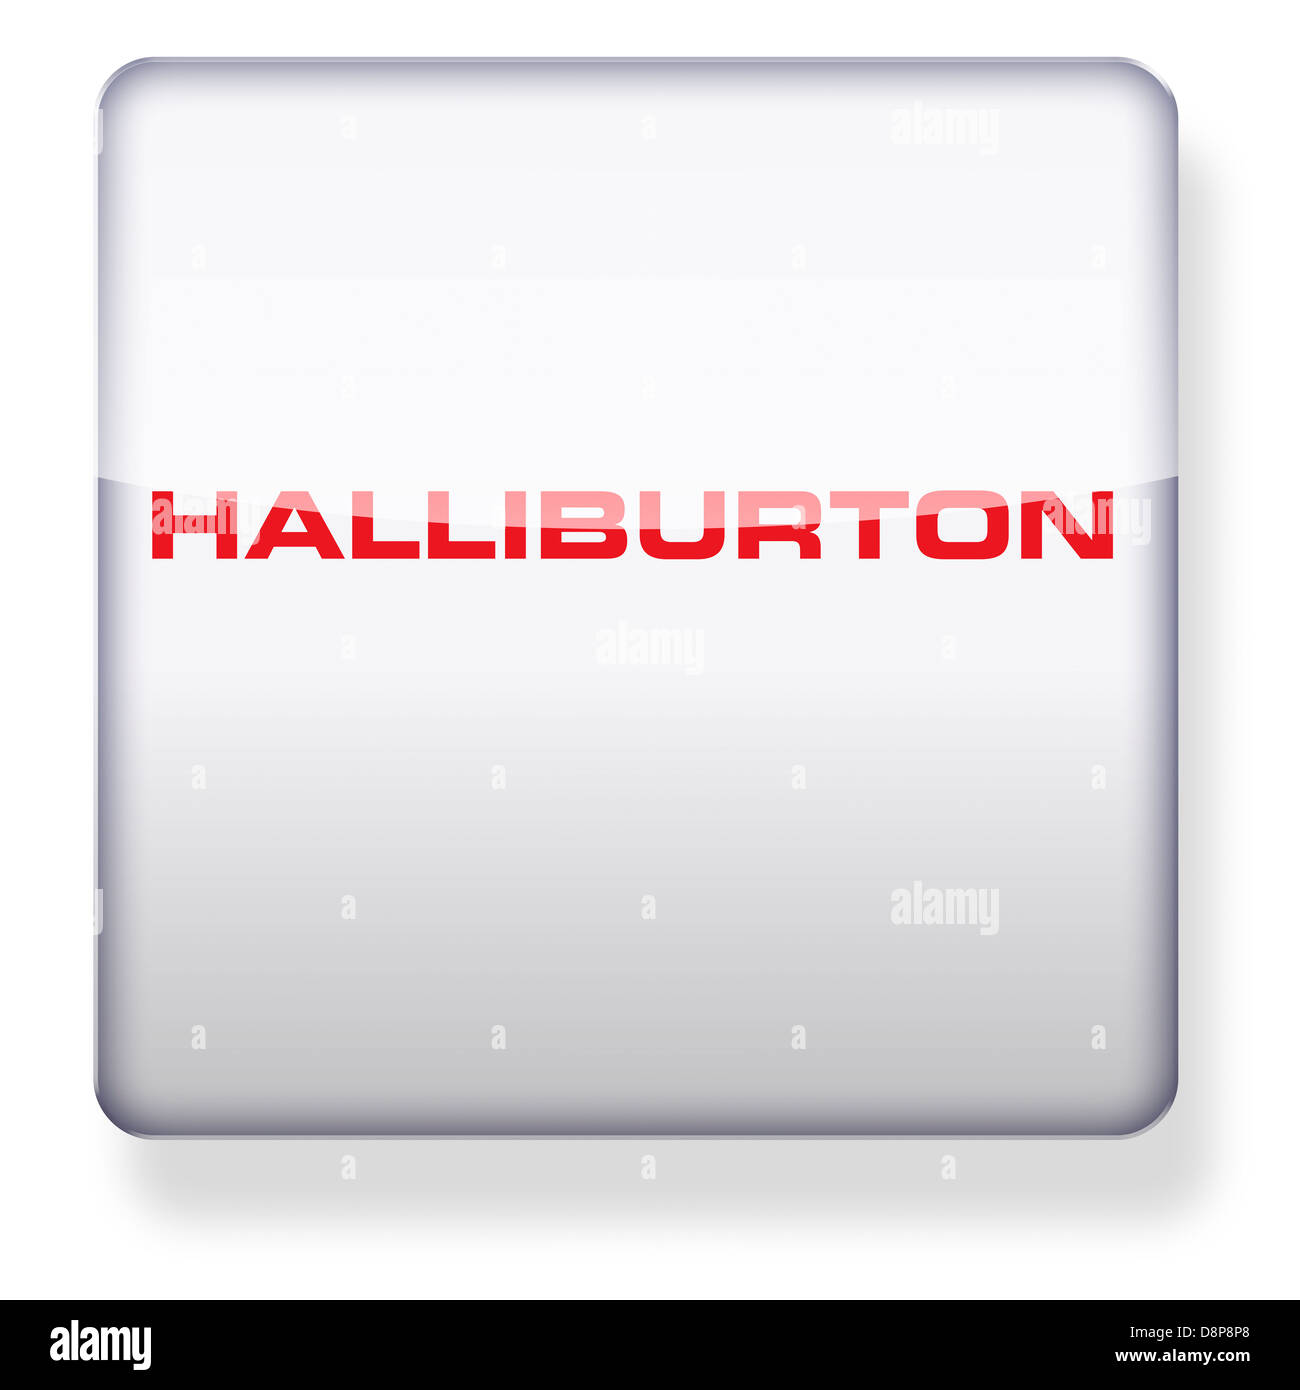 Halliburton logo as an app icon. Clipping path included. Stock Photo